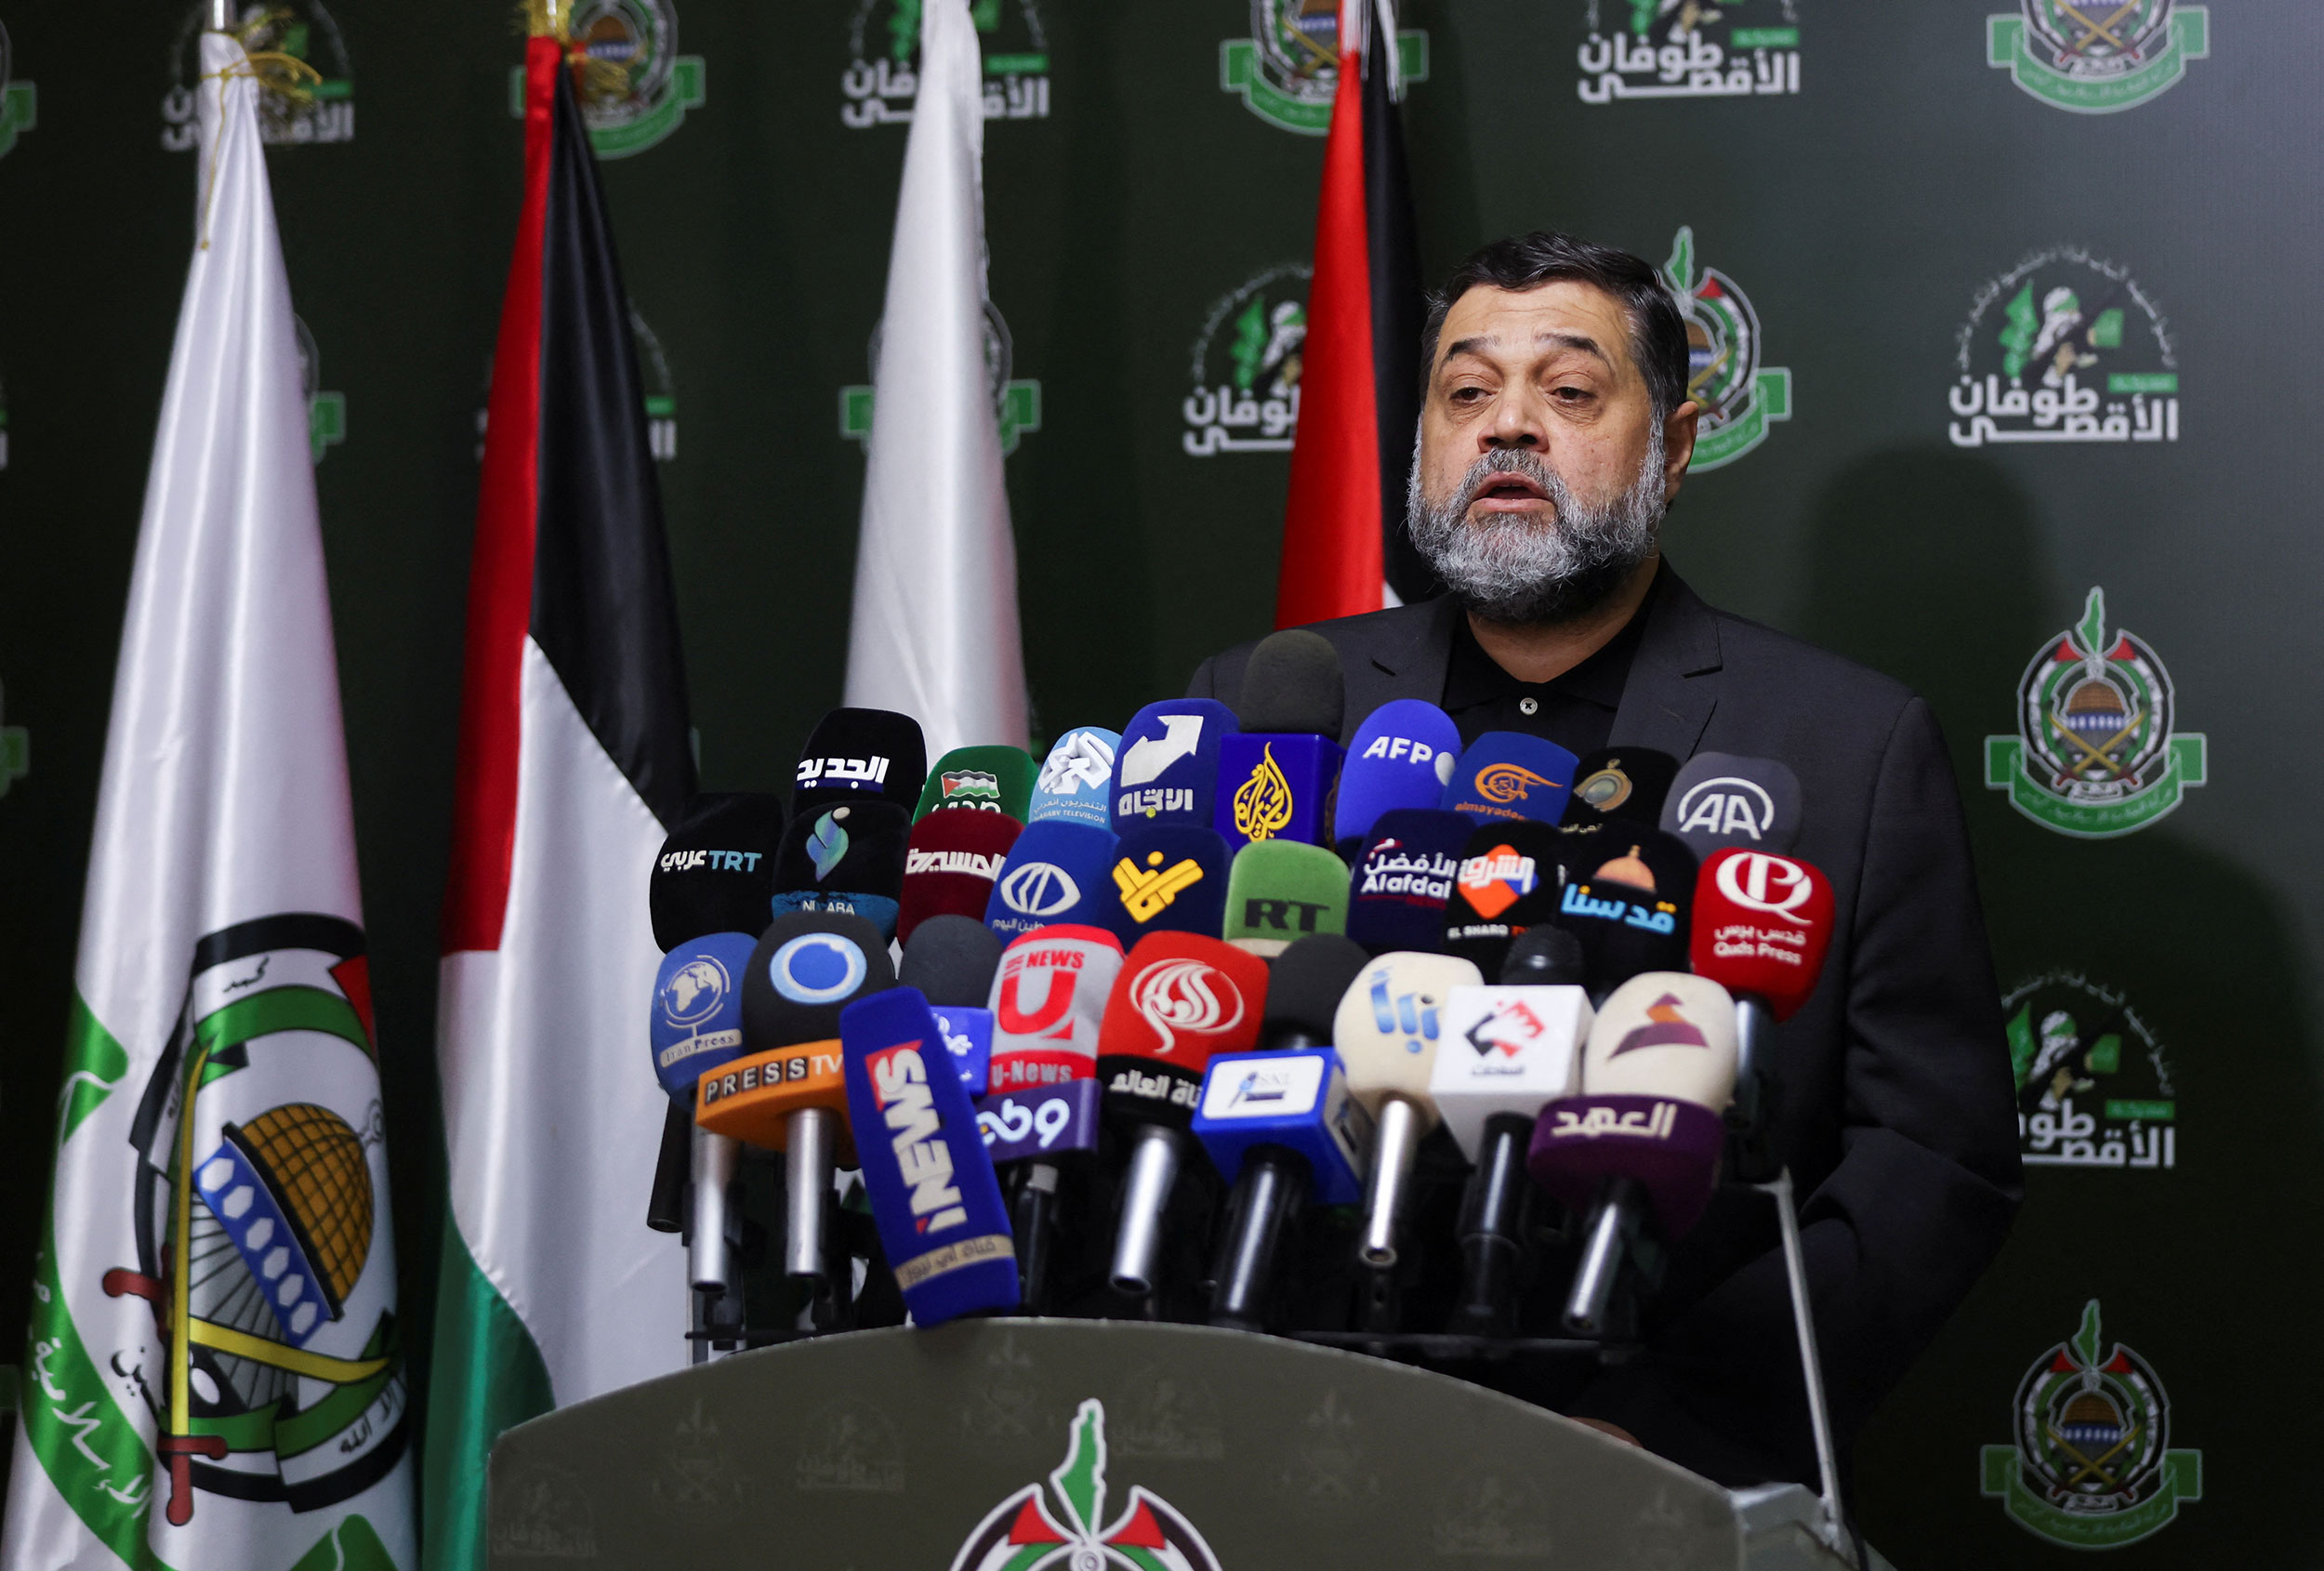 Hamas Representative Osama Hamdan speaks during a press conference in Beirut, Lebanon, on May 7.